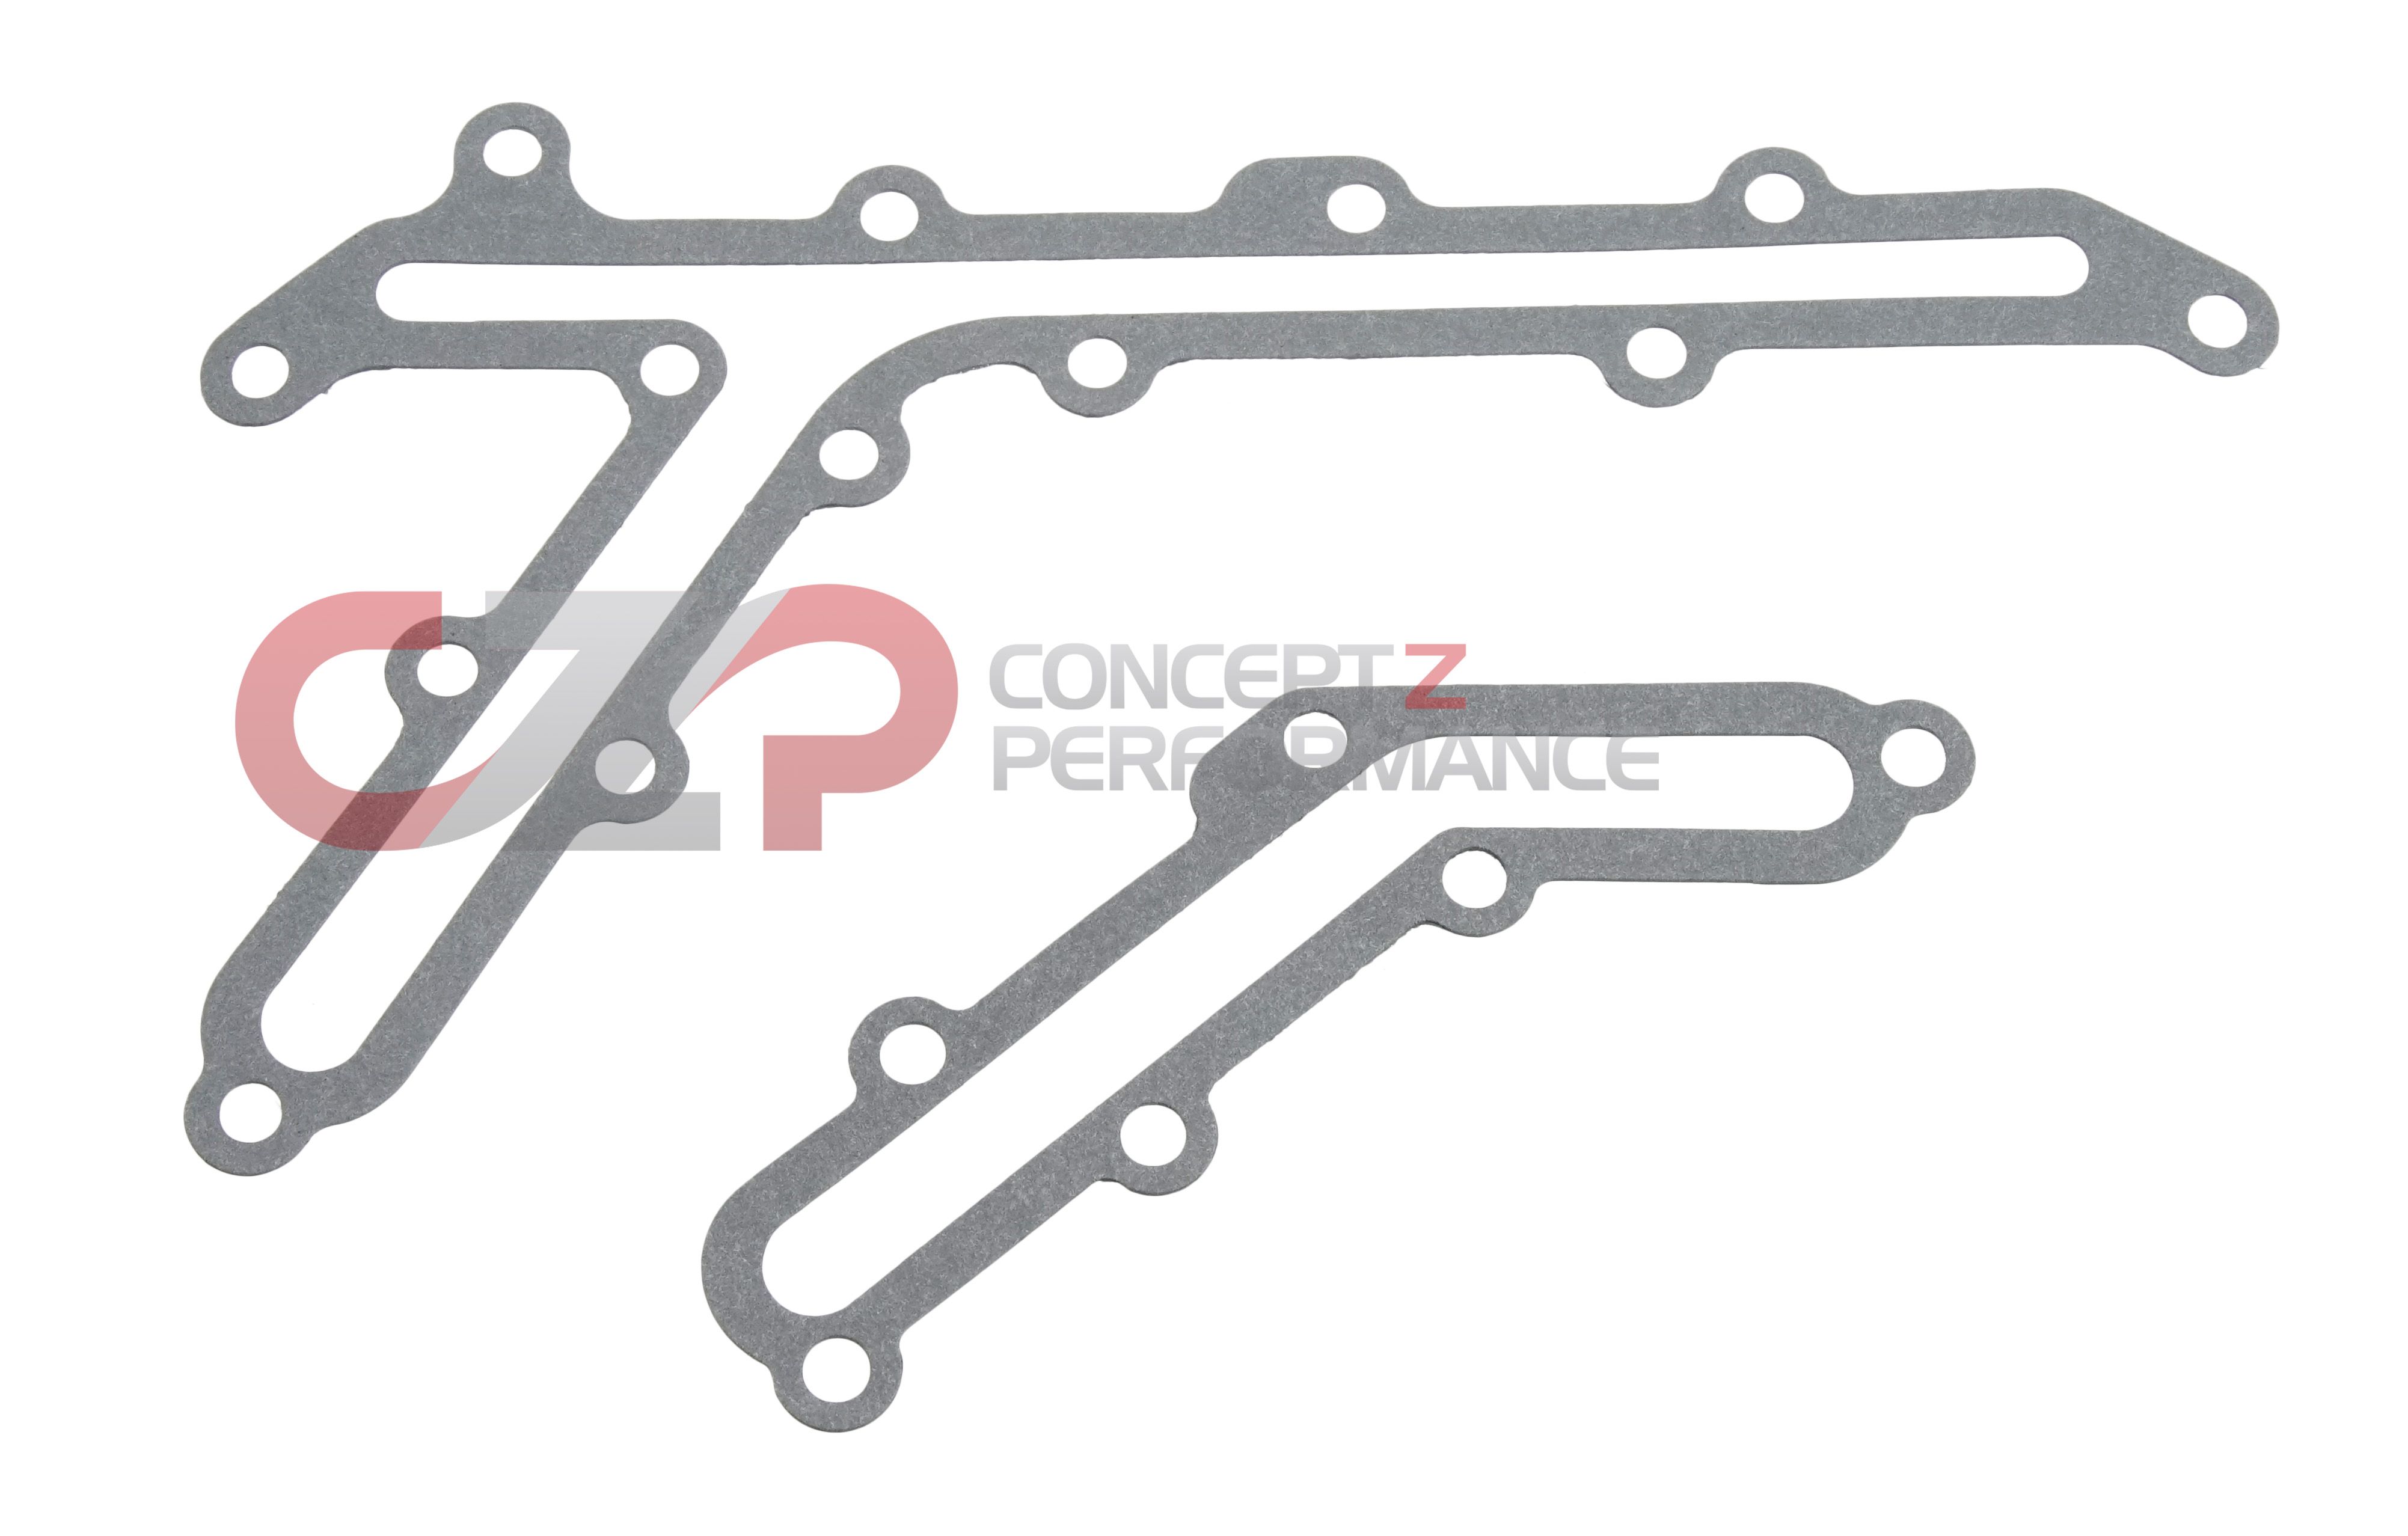 CZP Rear Timing Cover Oil Gallery Gasket Set, VQ35DE - Nissan Altima 07-17, Maxima 08-18, Pathfinder 13-16, Murano 07-14